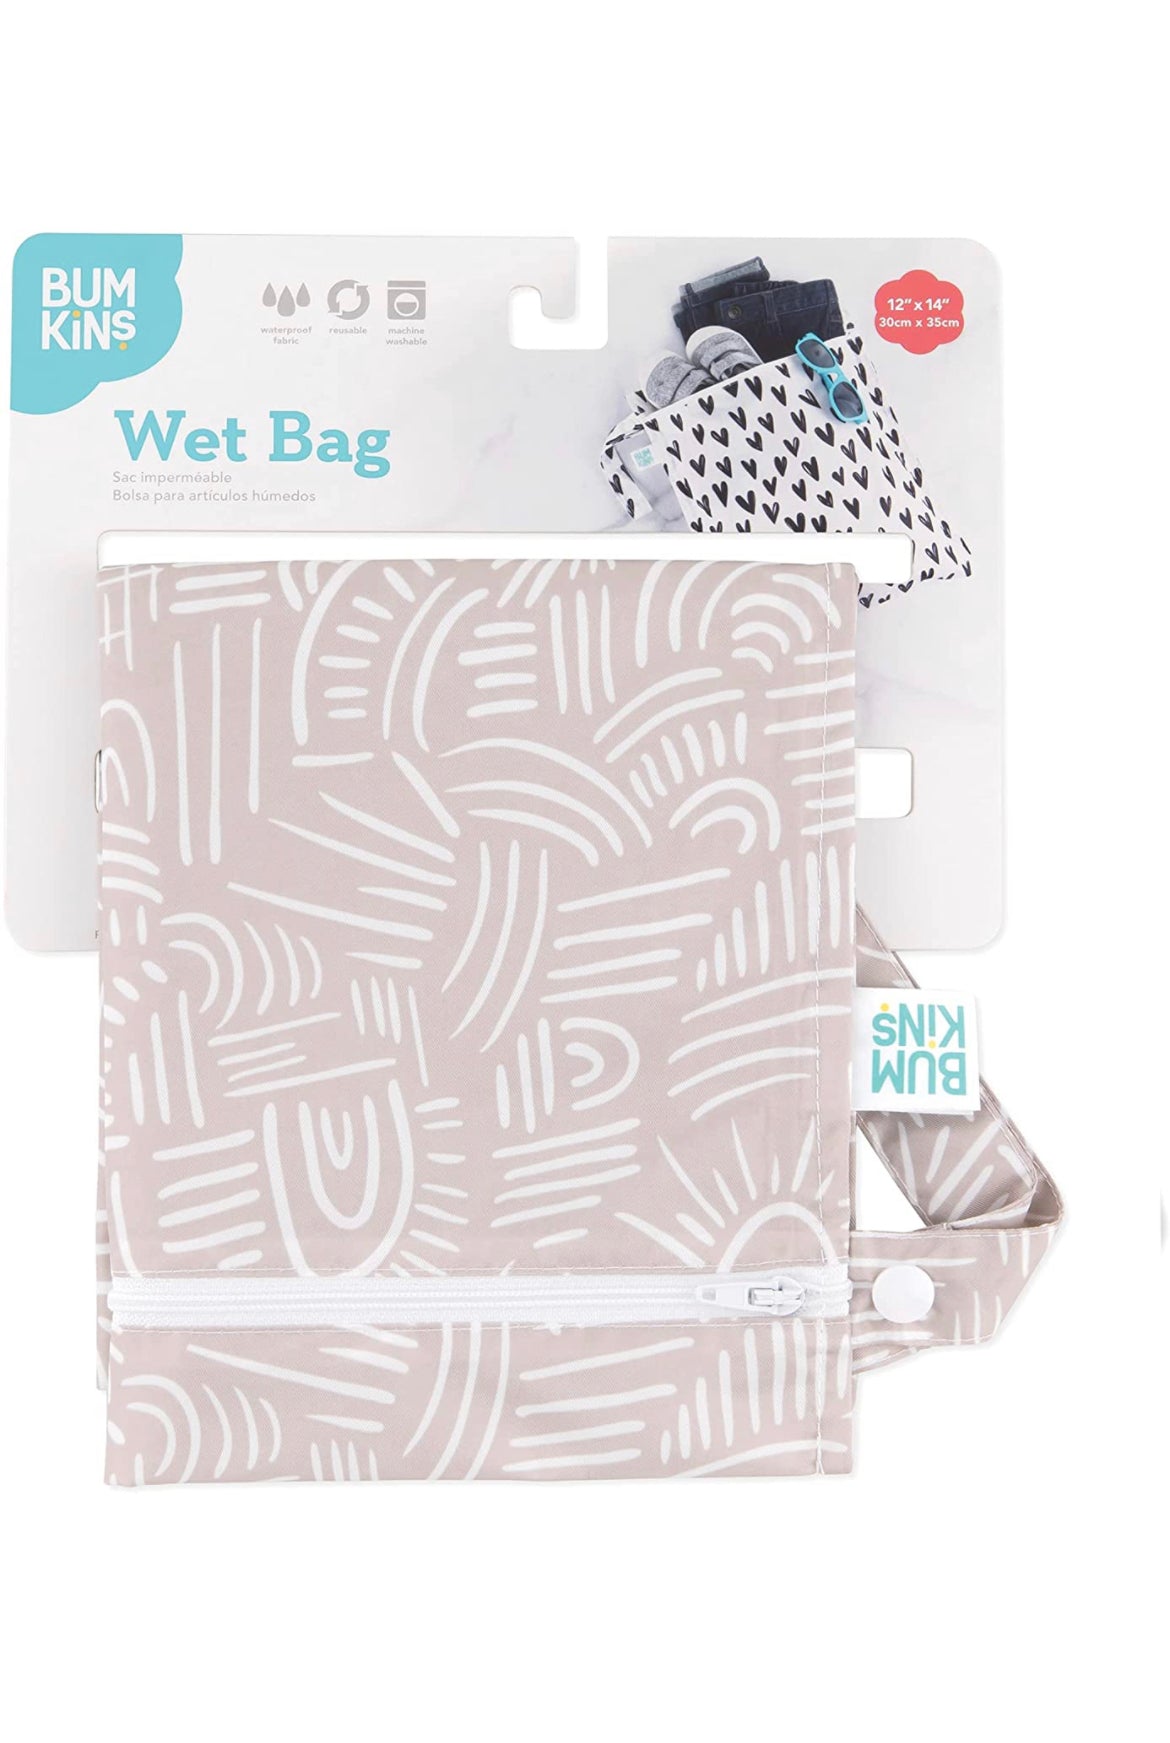 Bumkins Waterproof Wet Bags for Baby items.